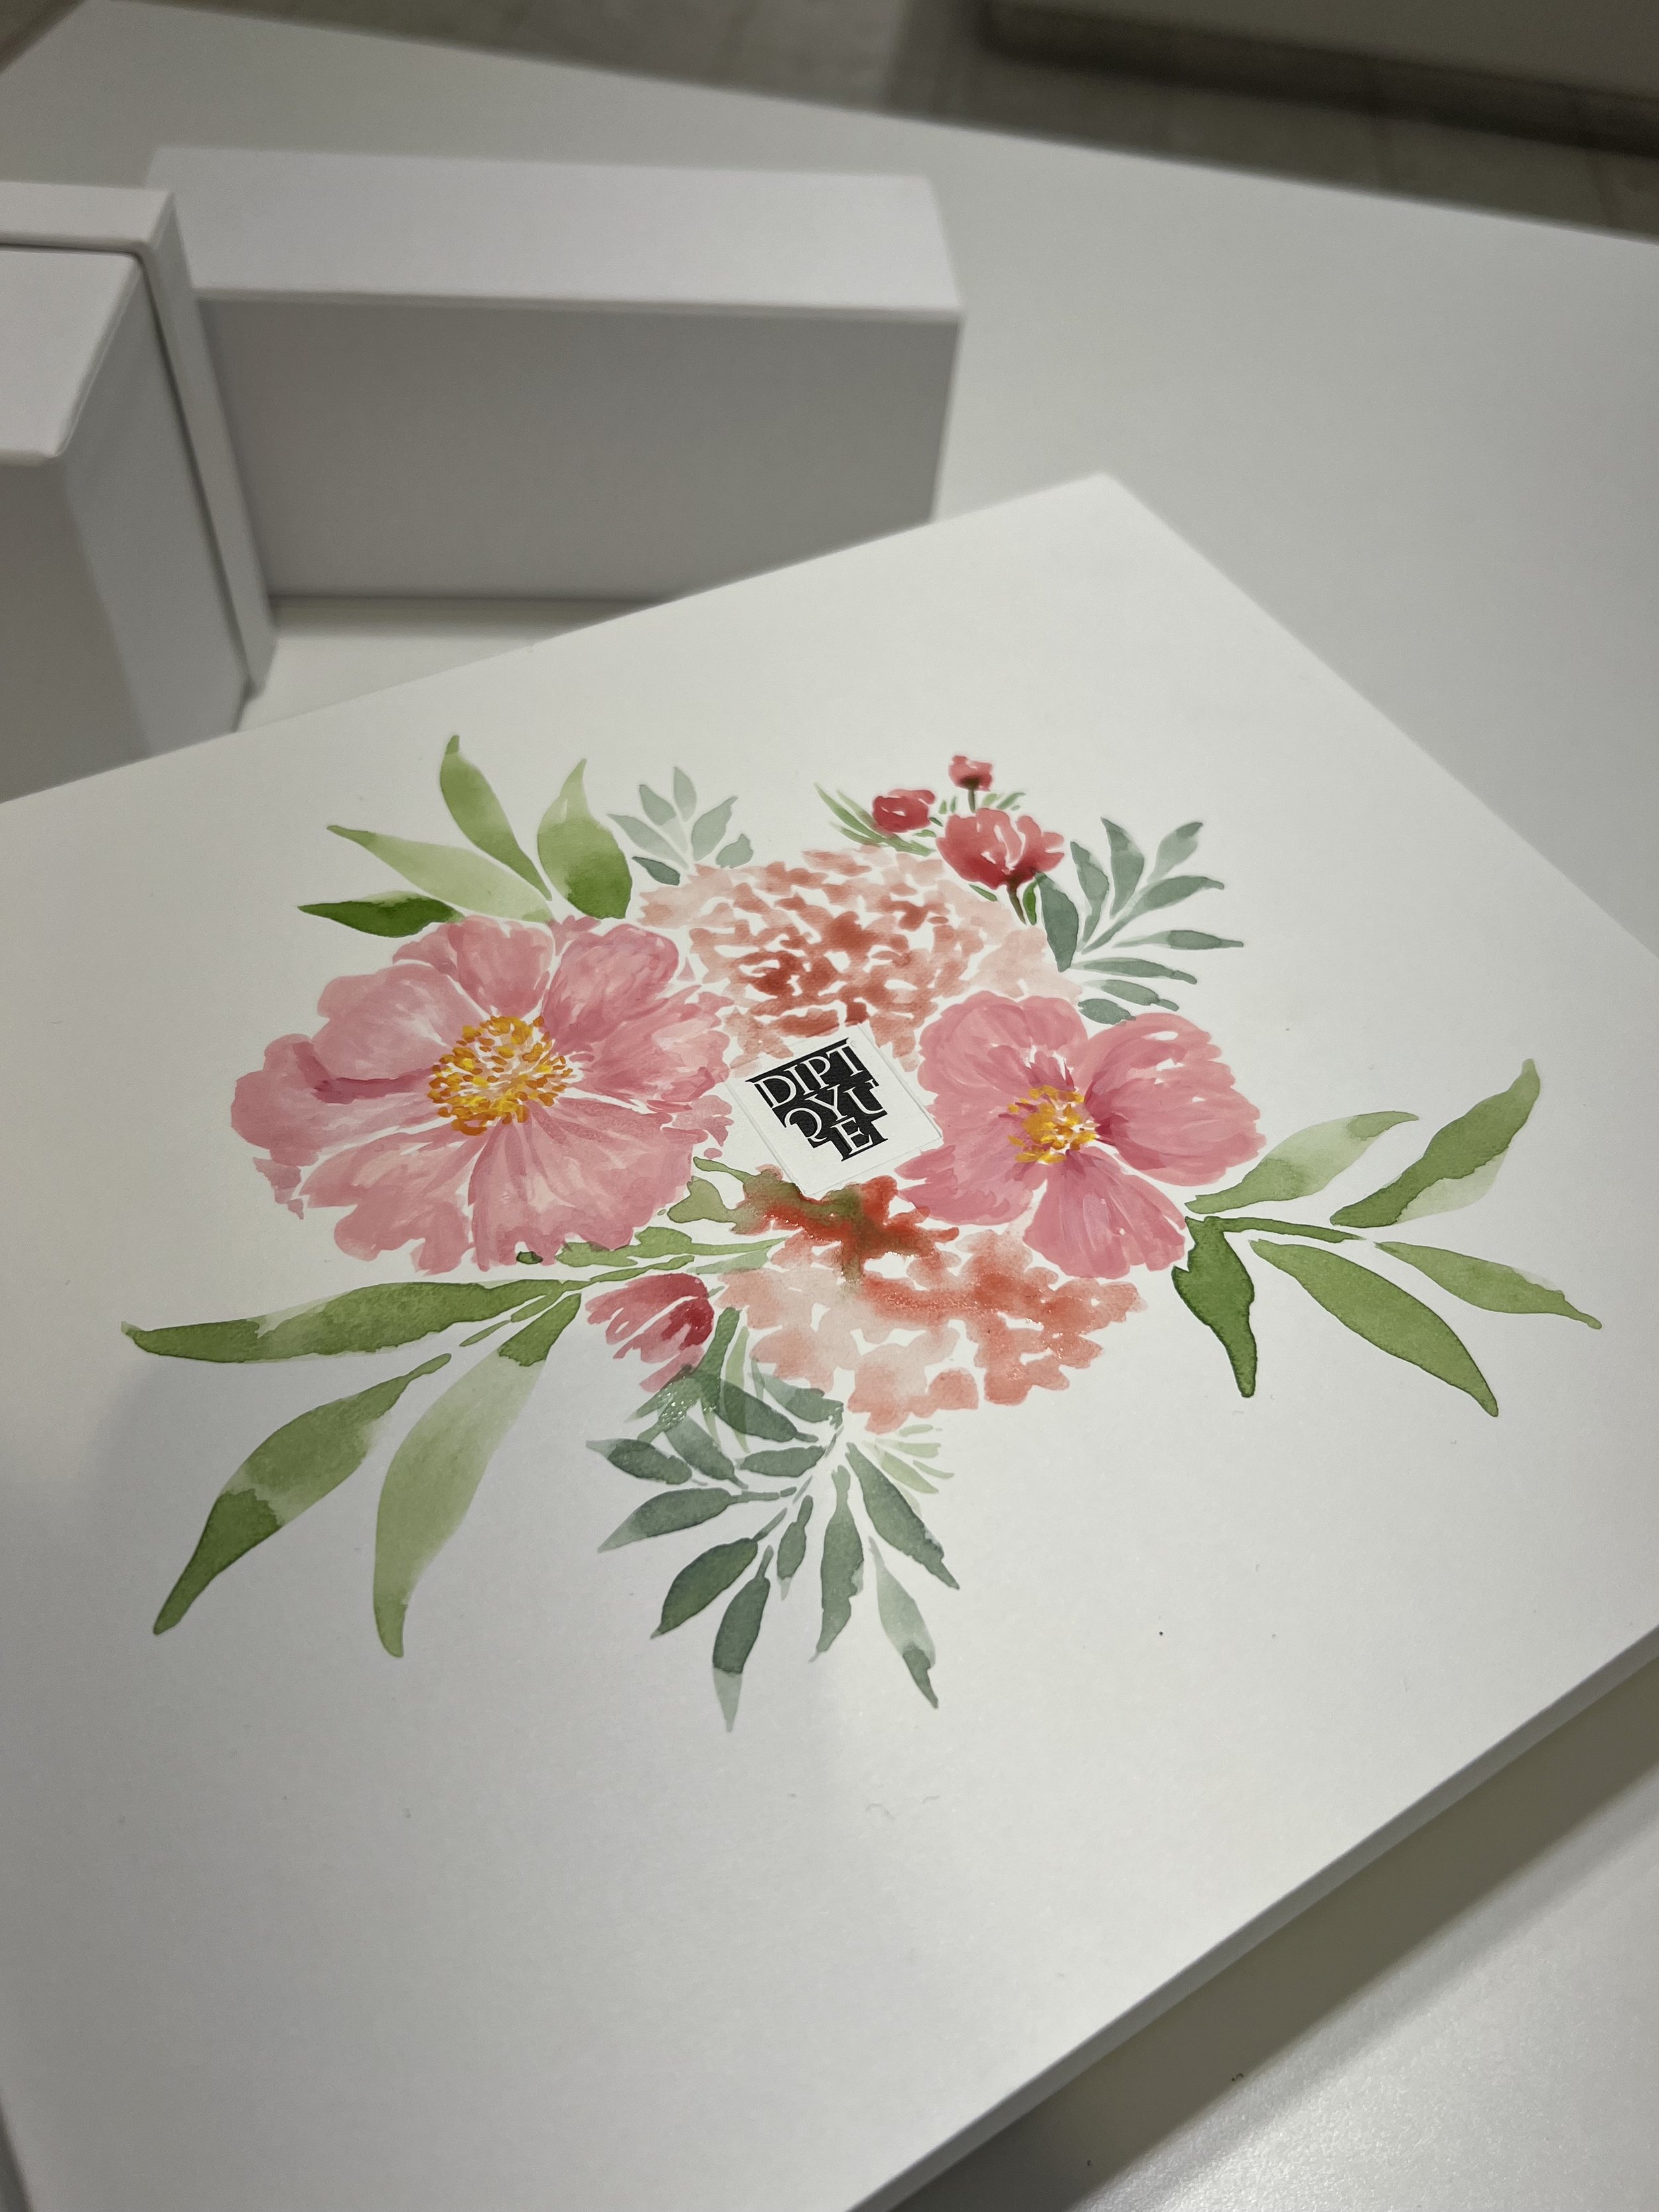 hand-painted-floral-arrangement-on-diptyque-box-at-holt-renfrew-ogilvy-event.jpeg